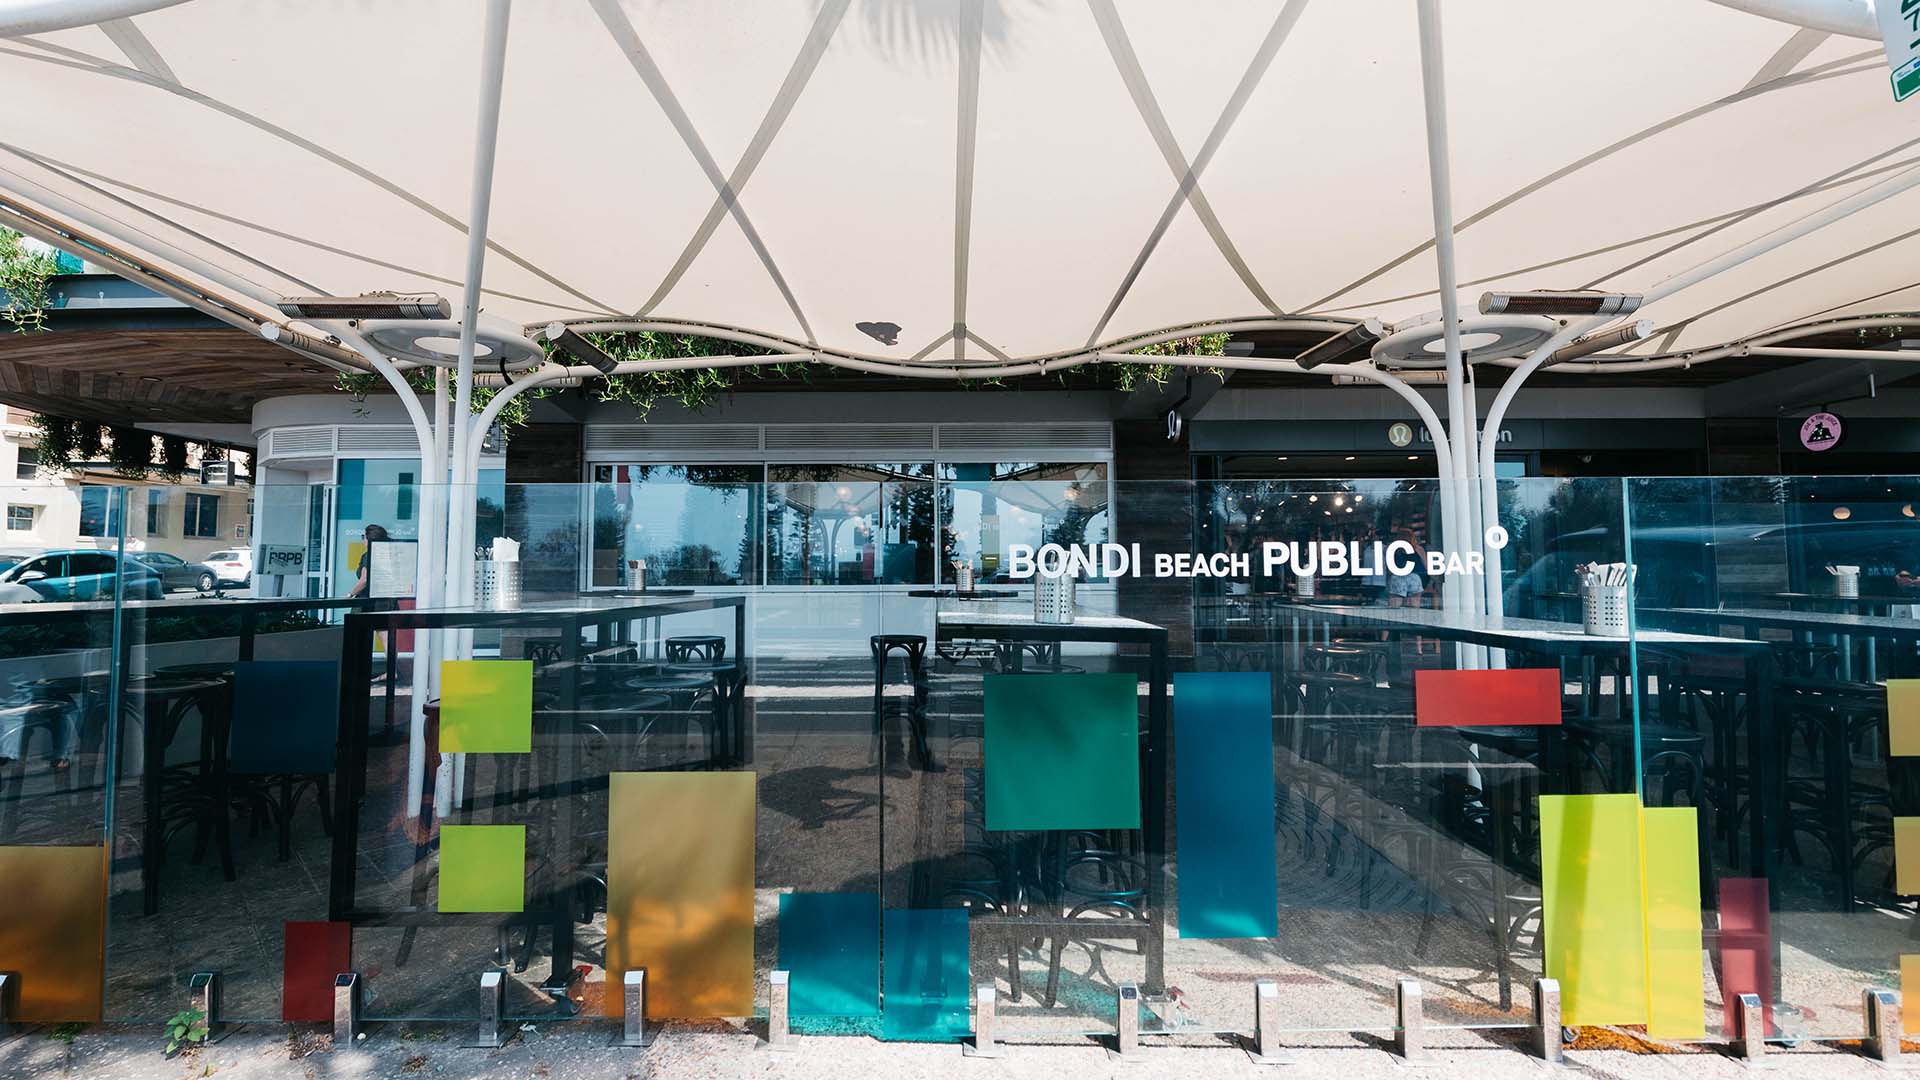 Bondi Beach Public Bar - CLOSED